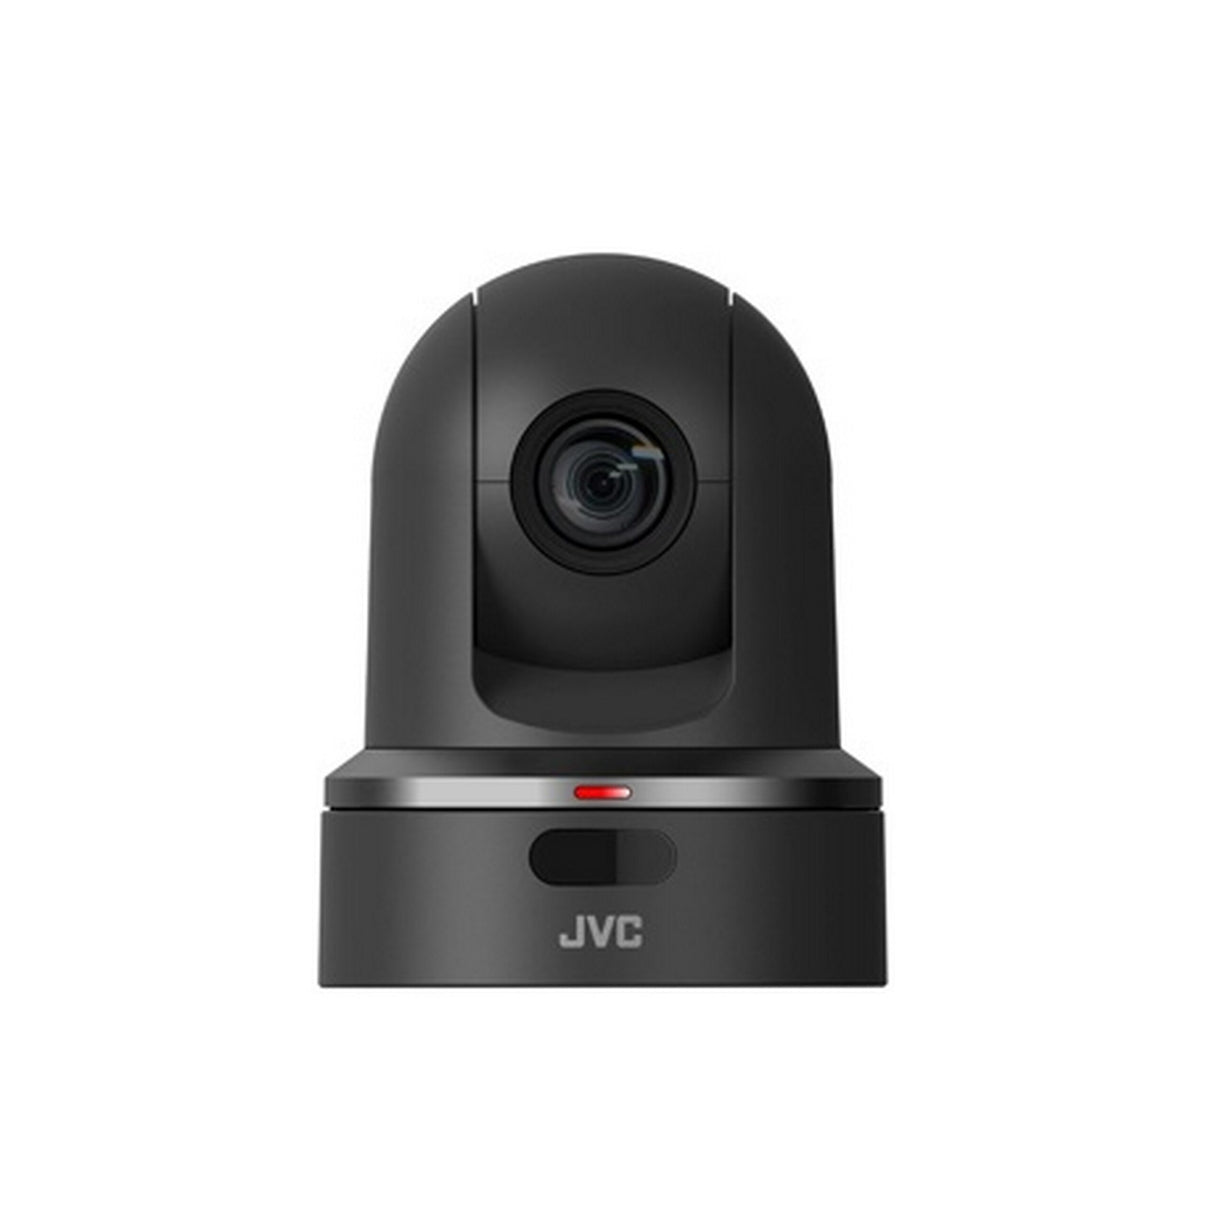 JVC KY-PZ100B Robotic PTZ Network Video Production Camera, Black